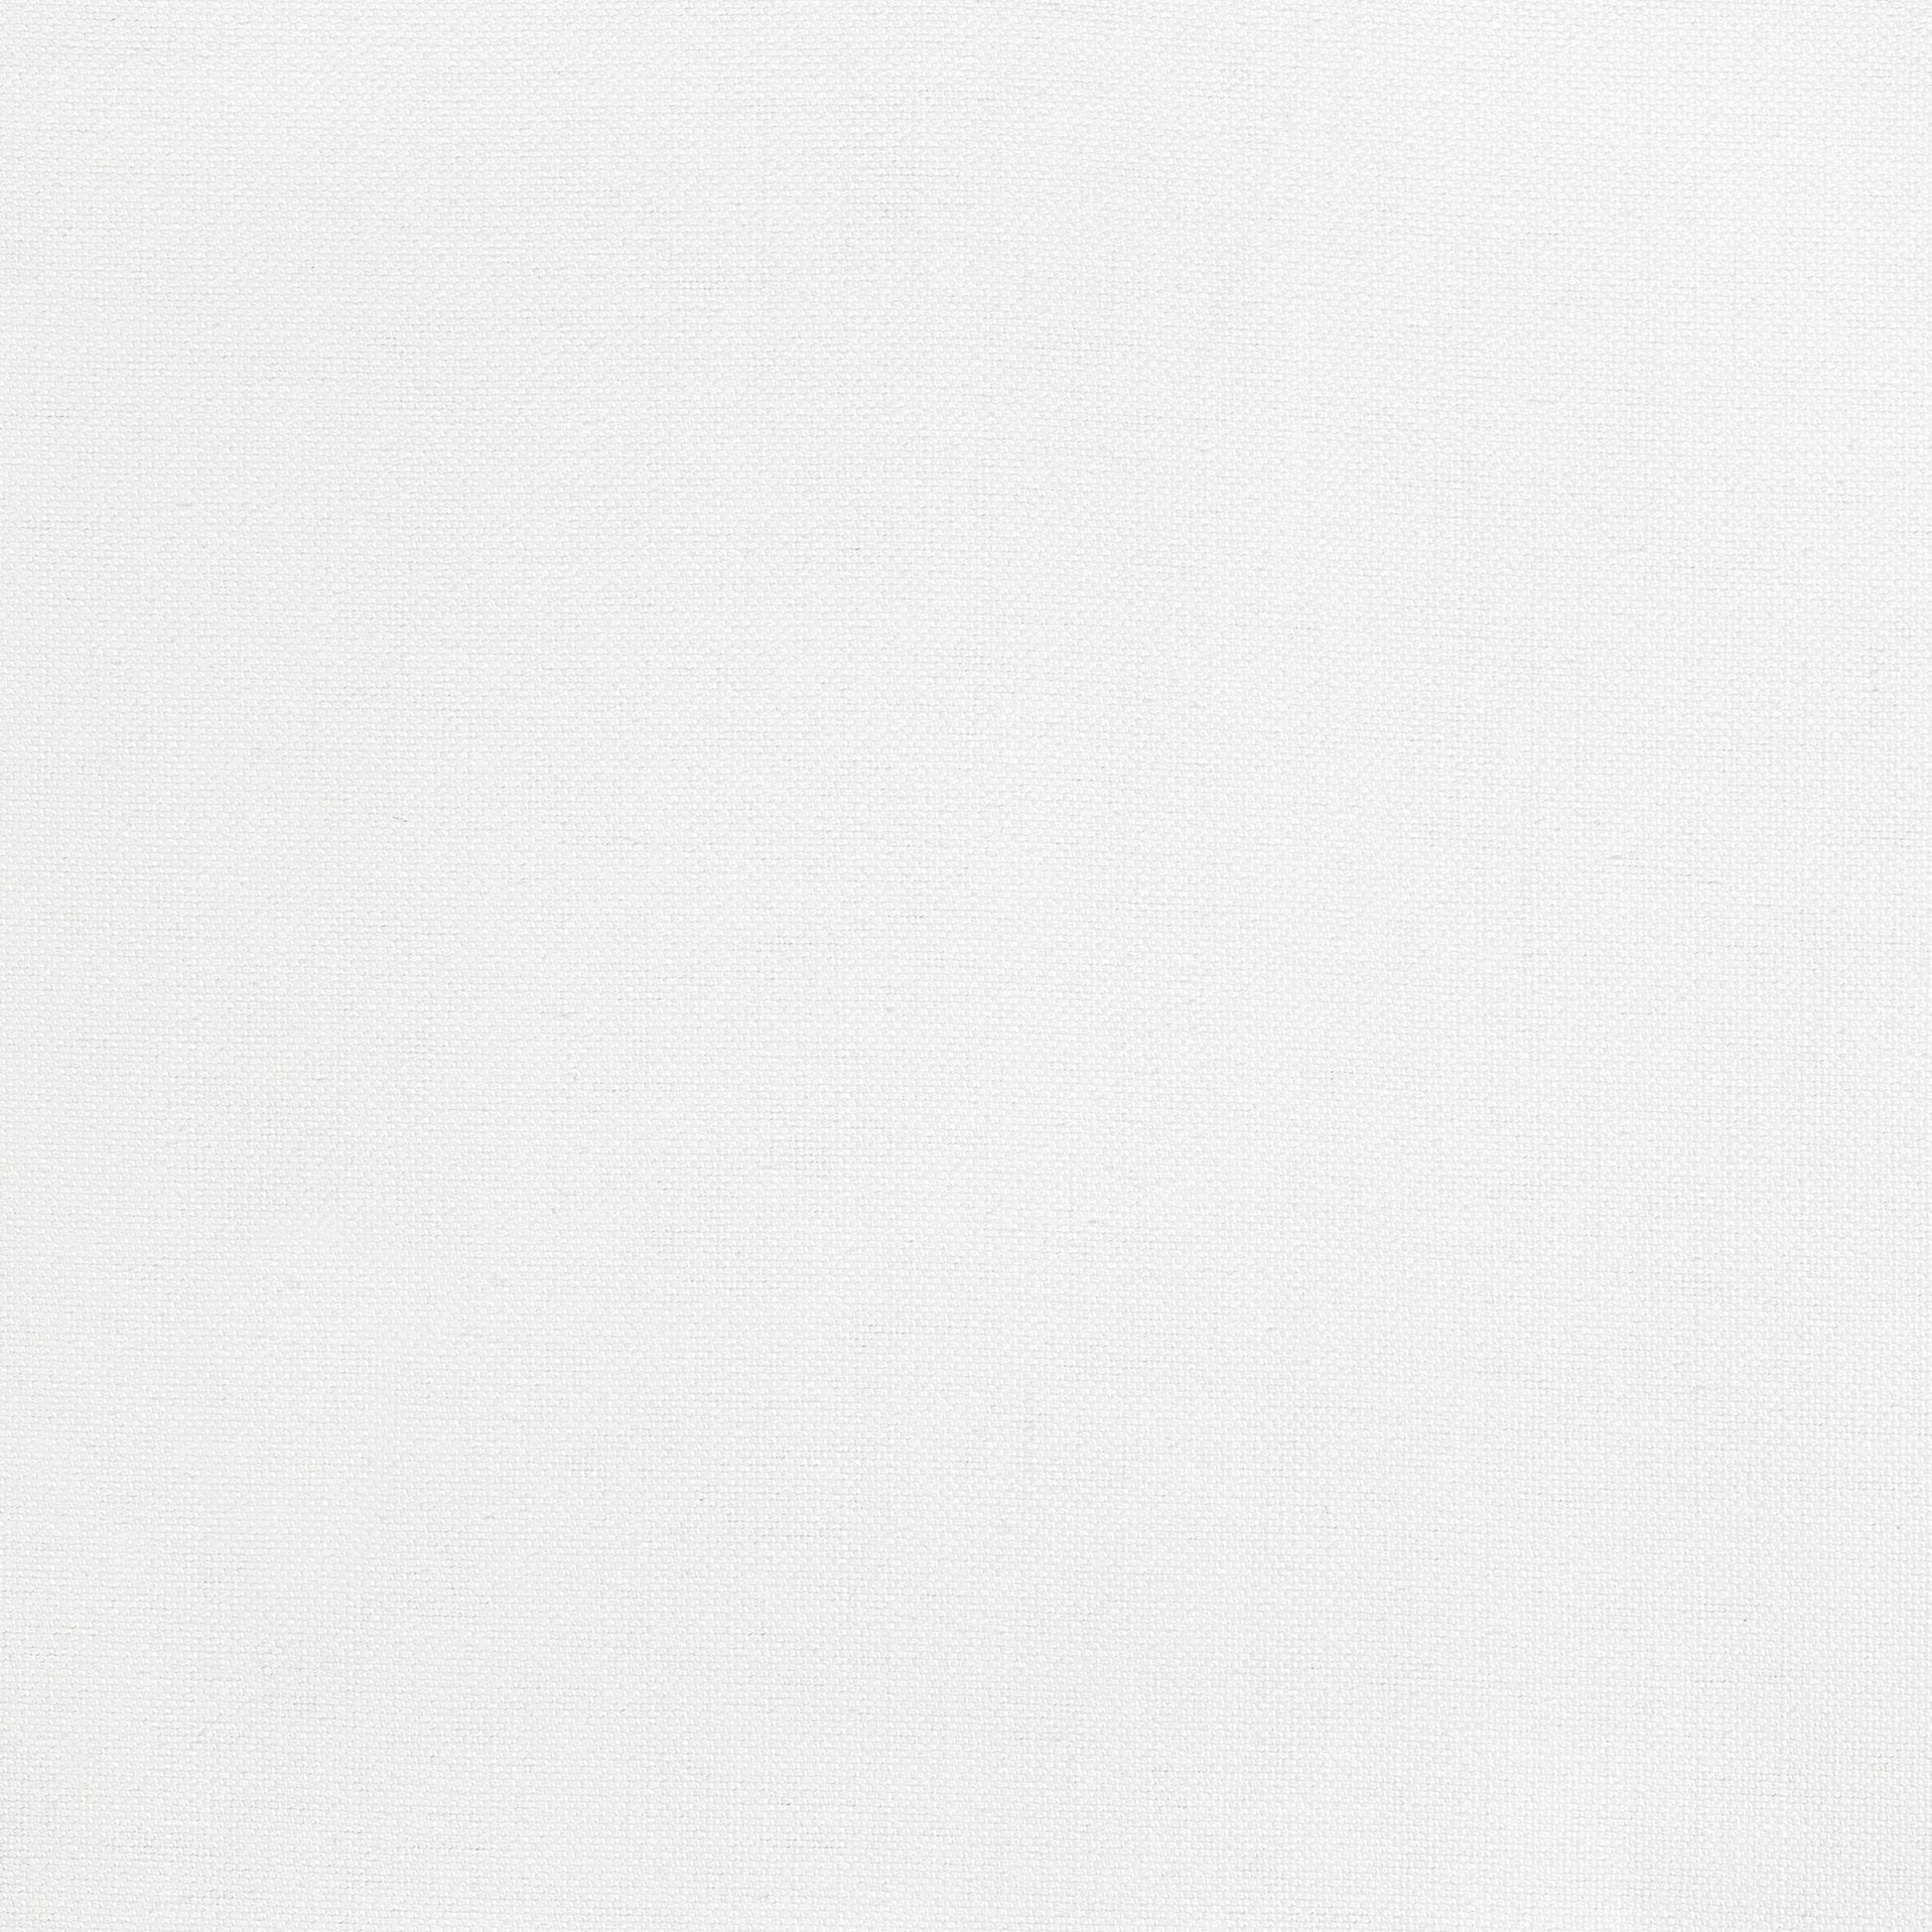 Textile sample linara 138 white close view 